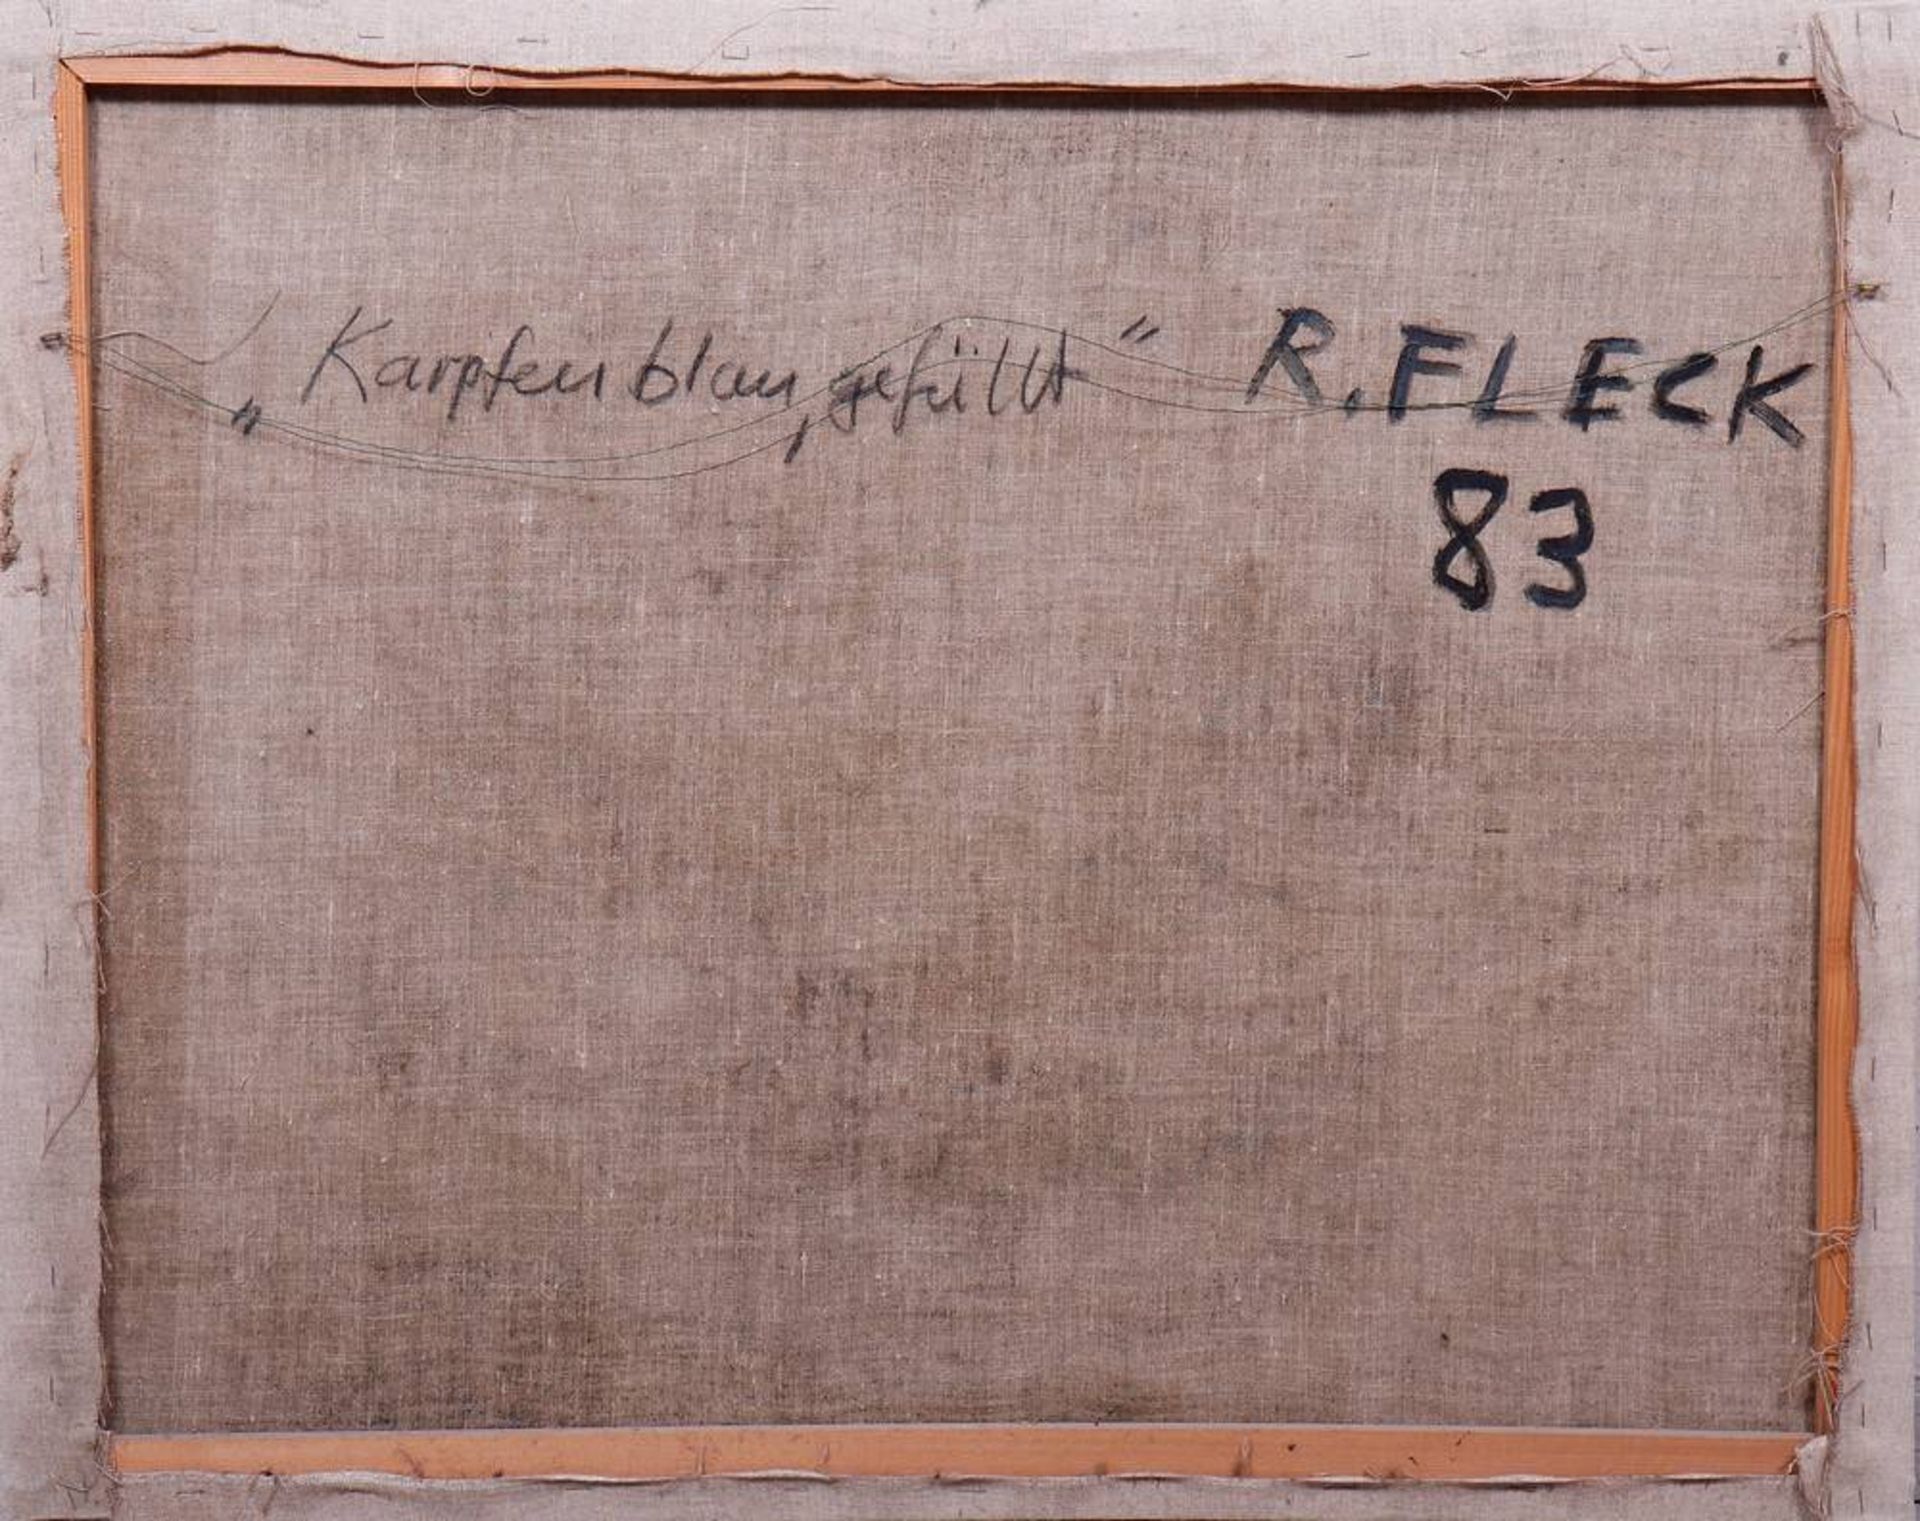 Ralph Fleck (b. 1951, Freiburg i. Br.)"Karpfen blau gefüllt" (carp, filled blue), 1983, oil/ - Bild 3 aus 4